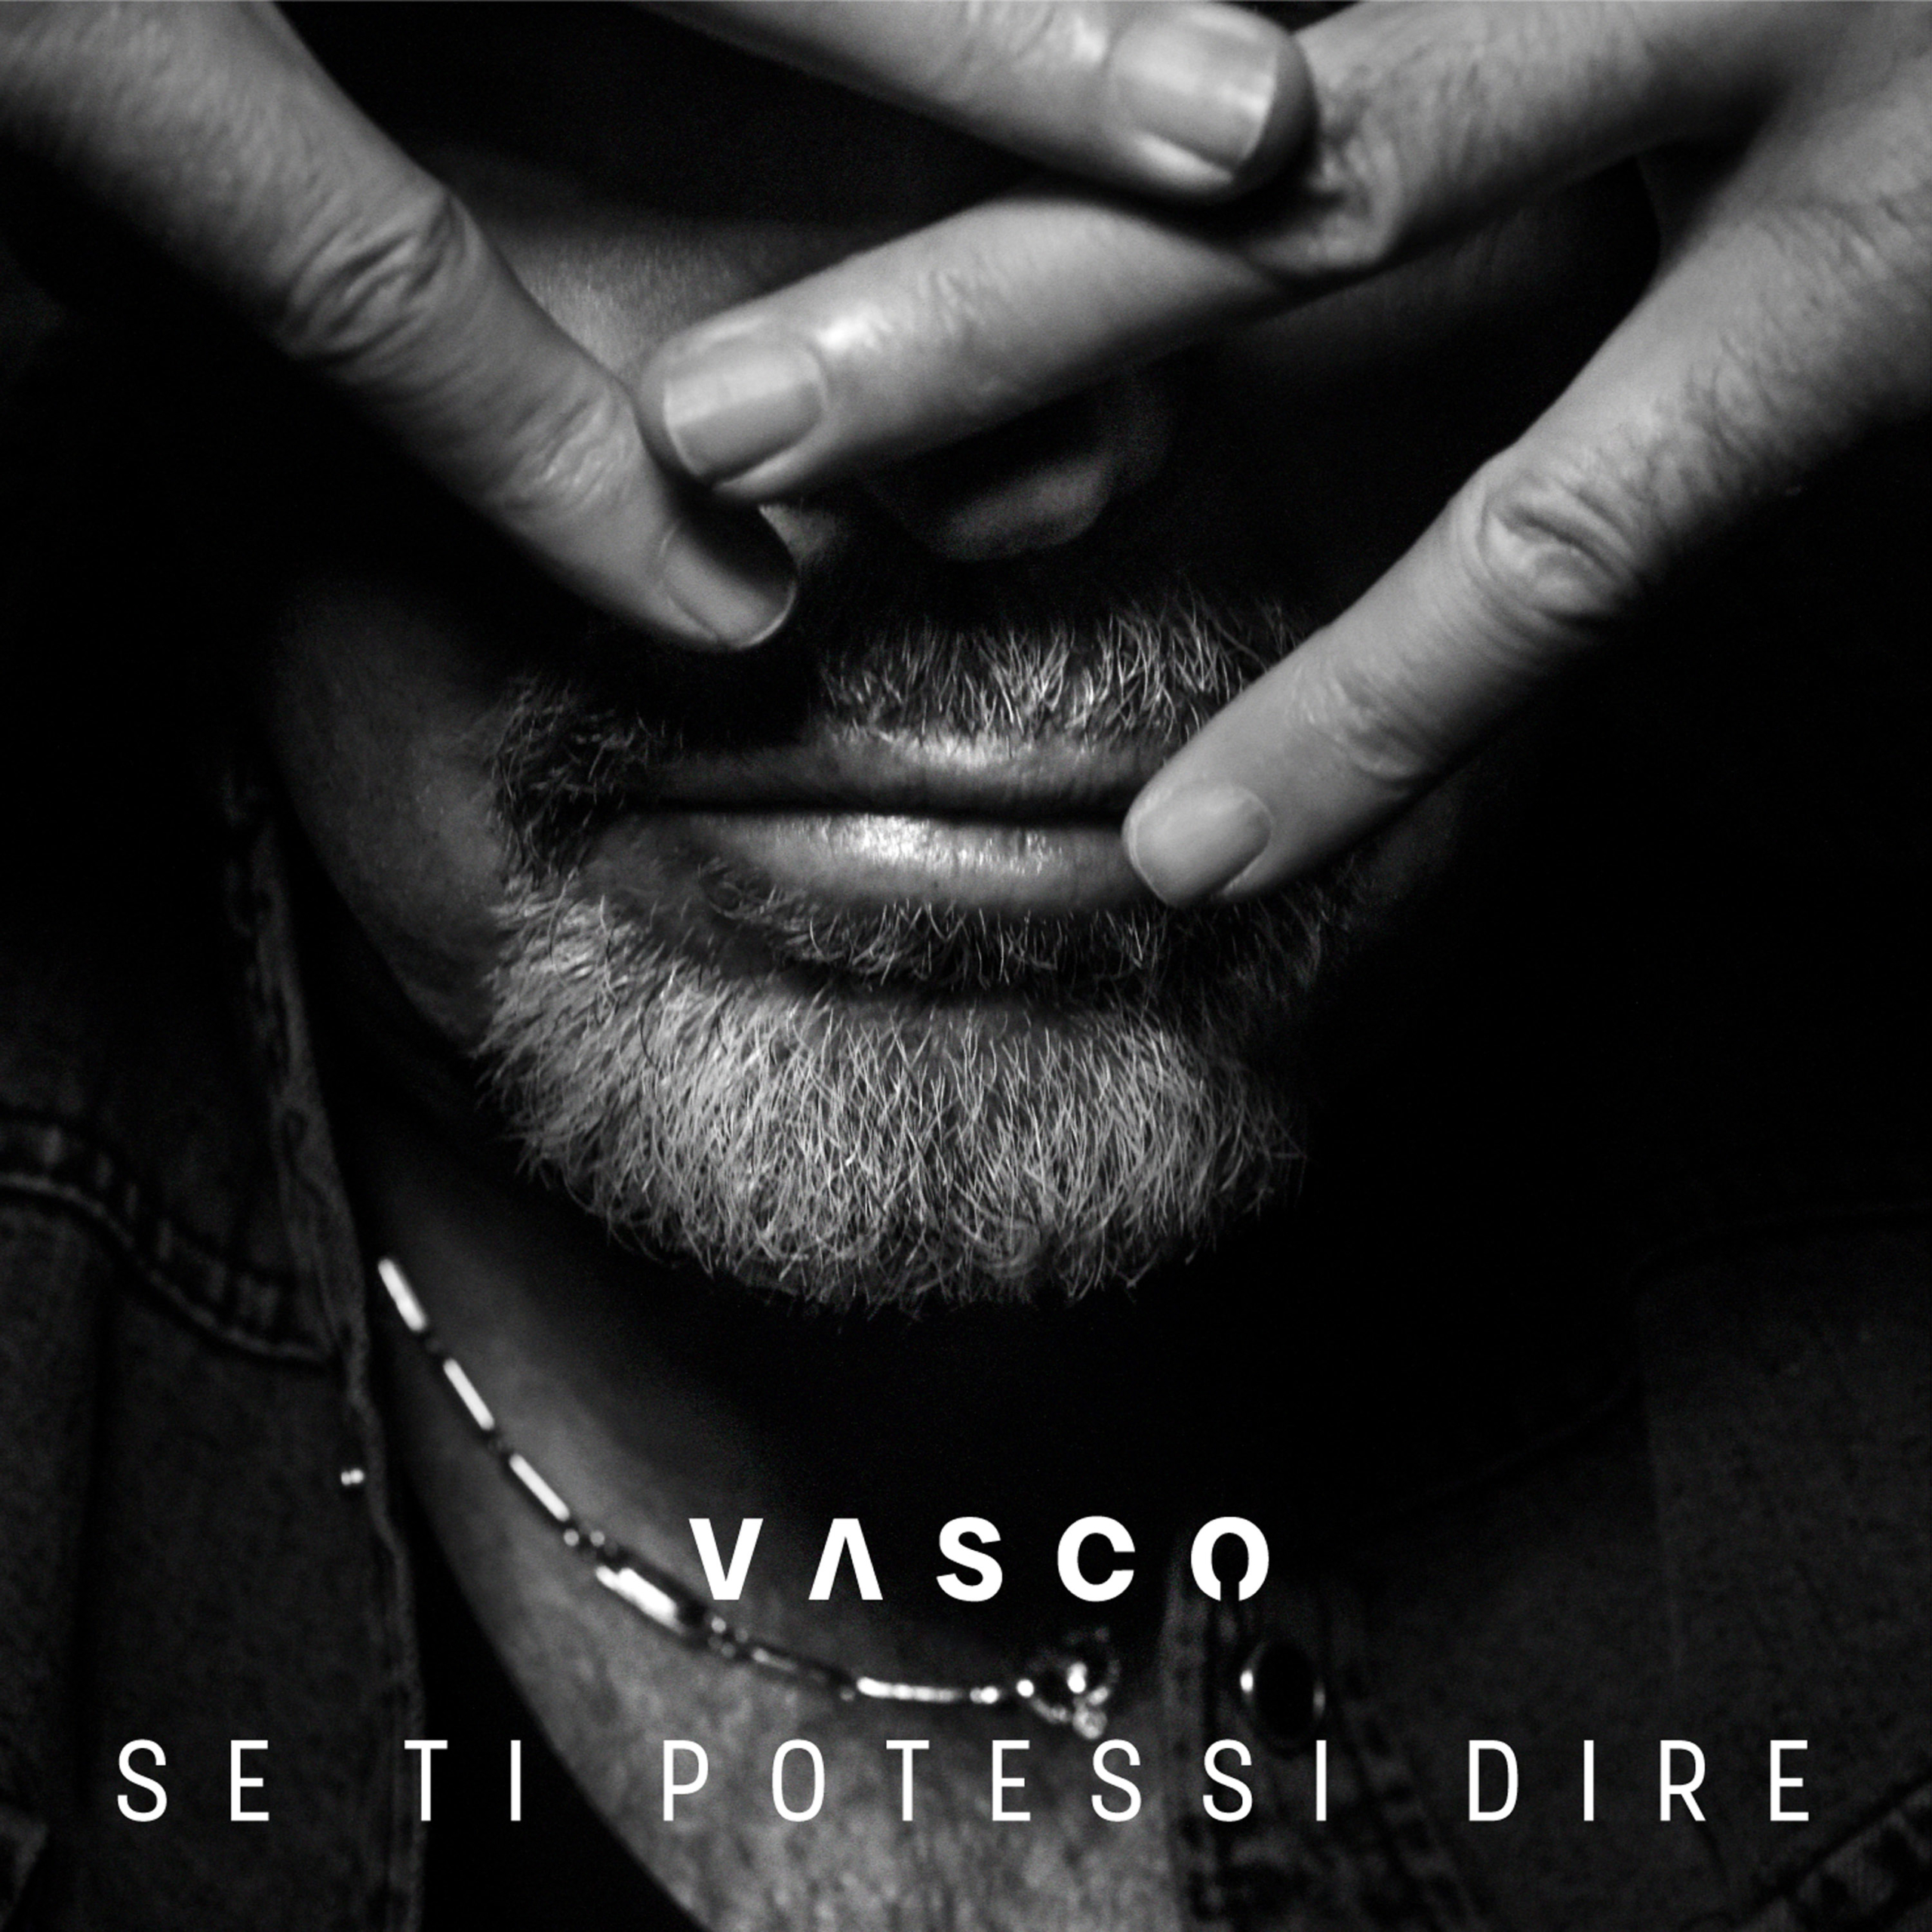 Se ti potessi dire, Vasco Rossi | Portfolio Giordano Mazzi | giordanomazzi.com